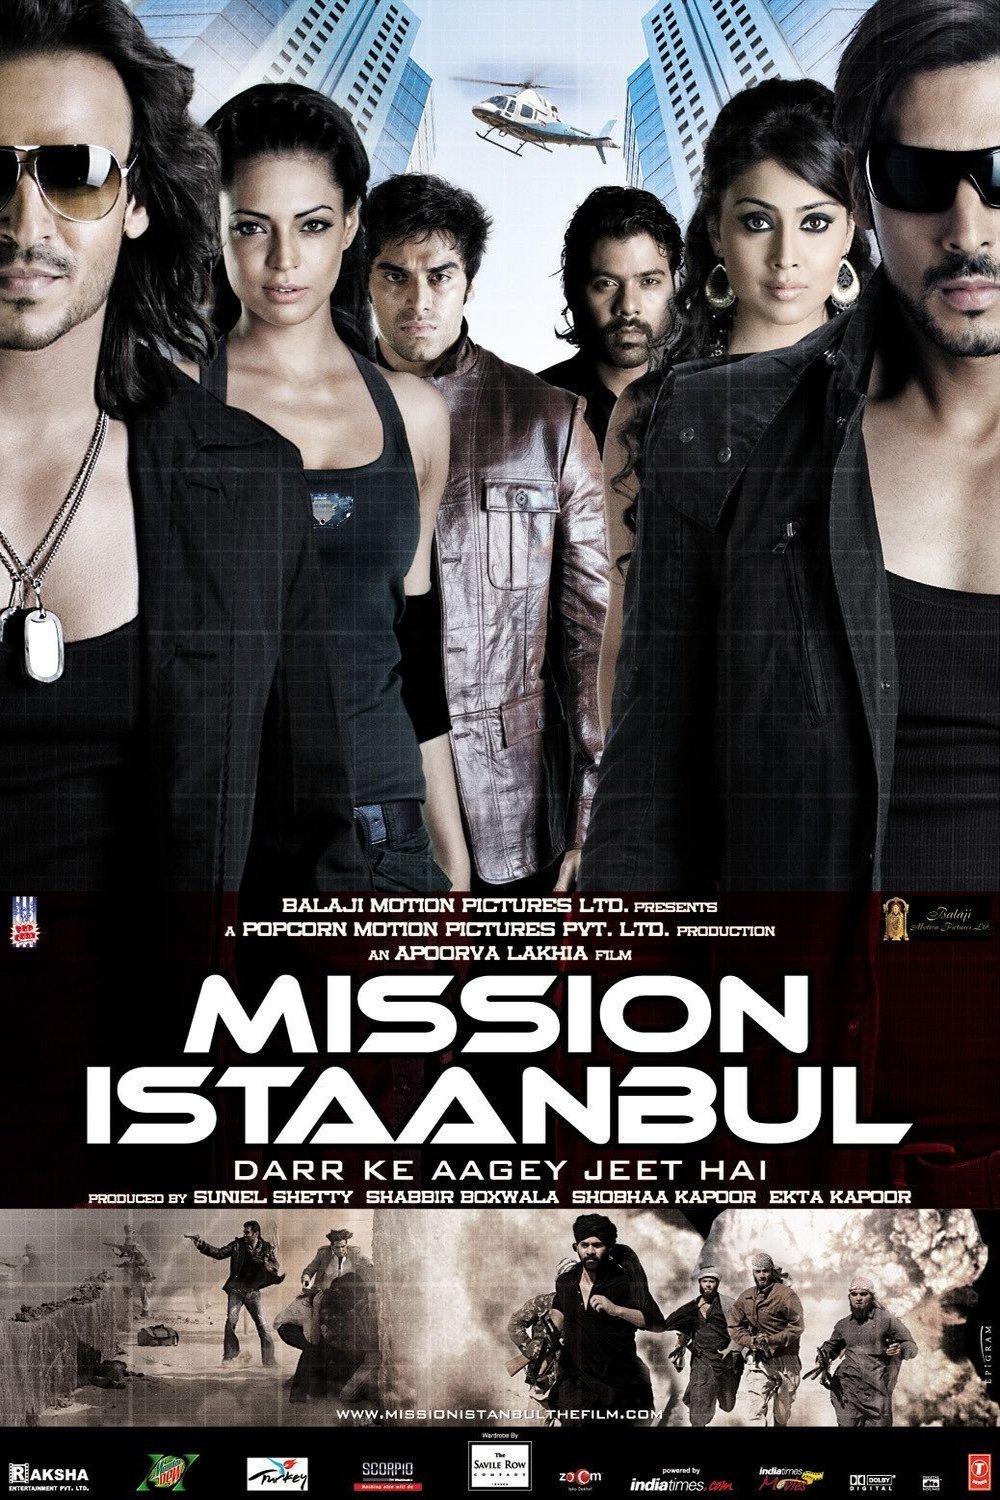 L'affiche originale du film Mission Istaanbul: Darr Ke Aagey Jeet Hai! en Hindi